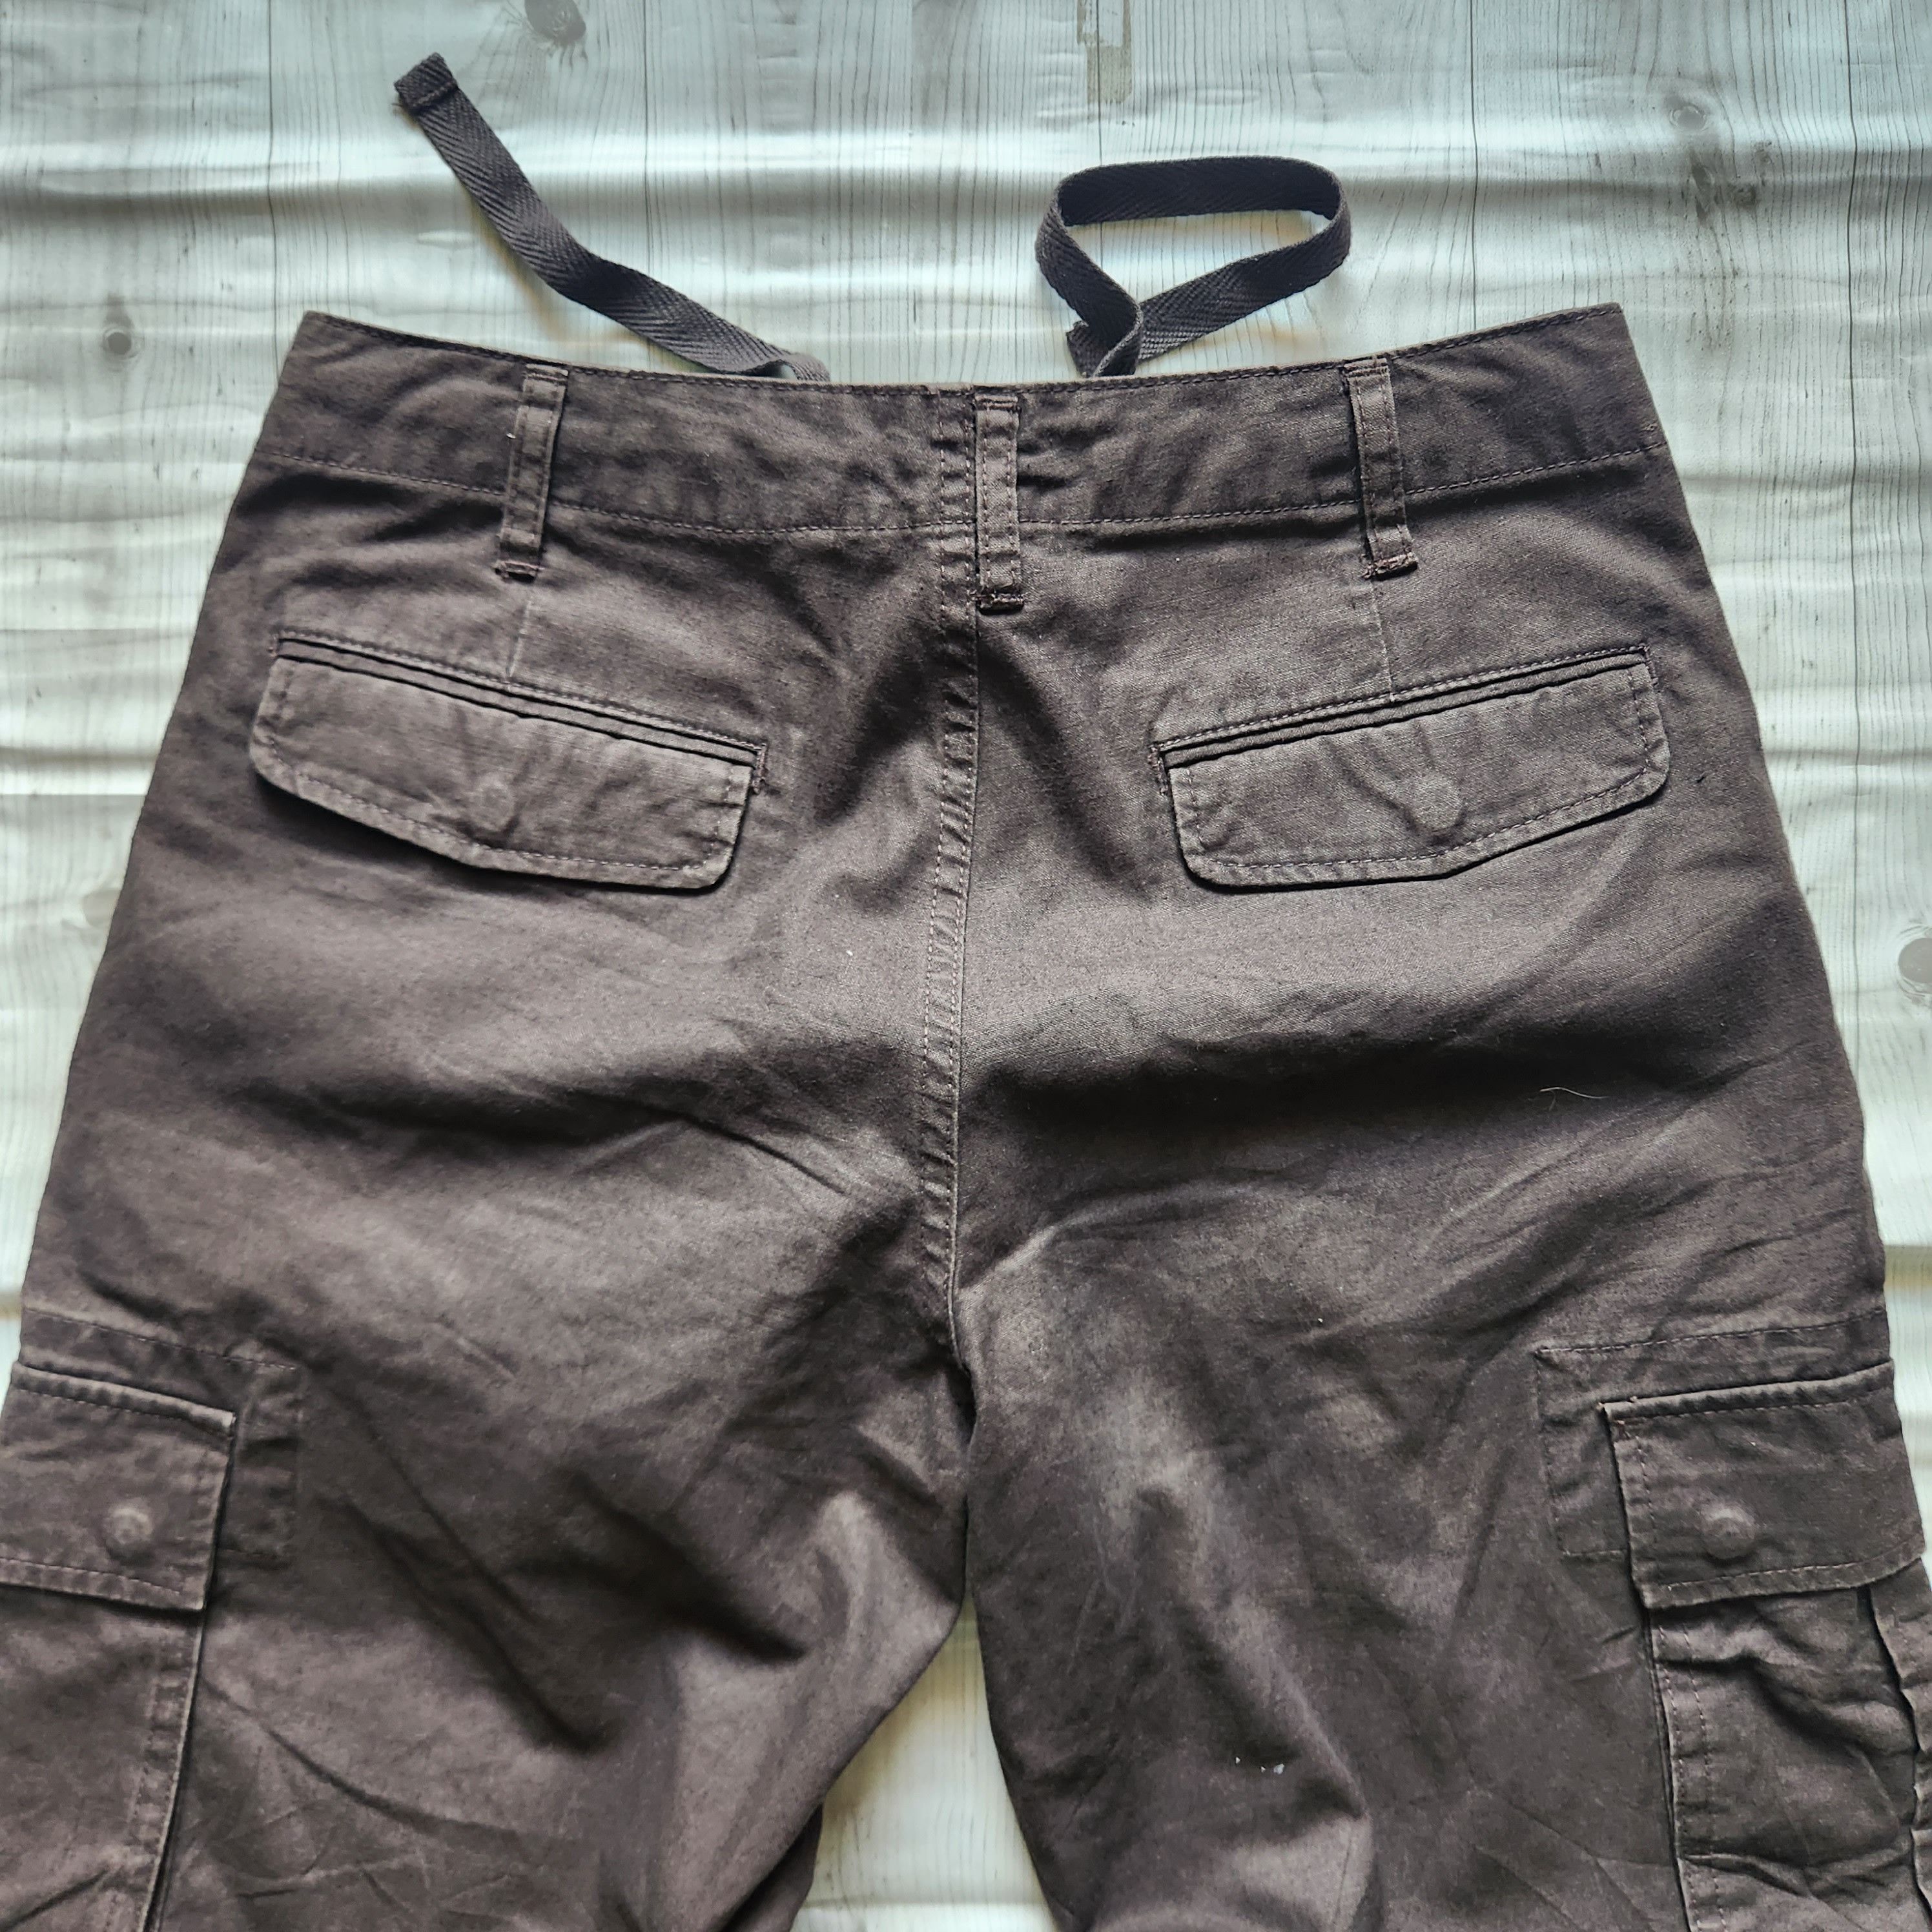 Uniqlo Tactical Pants Cargo Pockets - 19